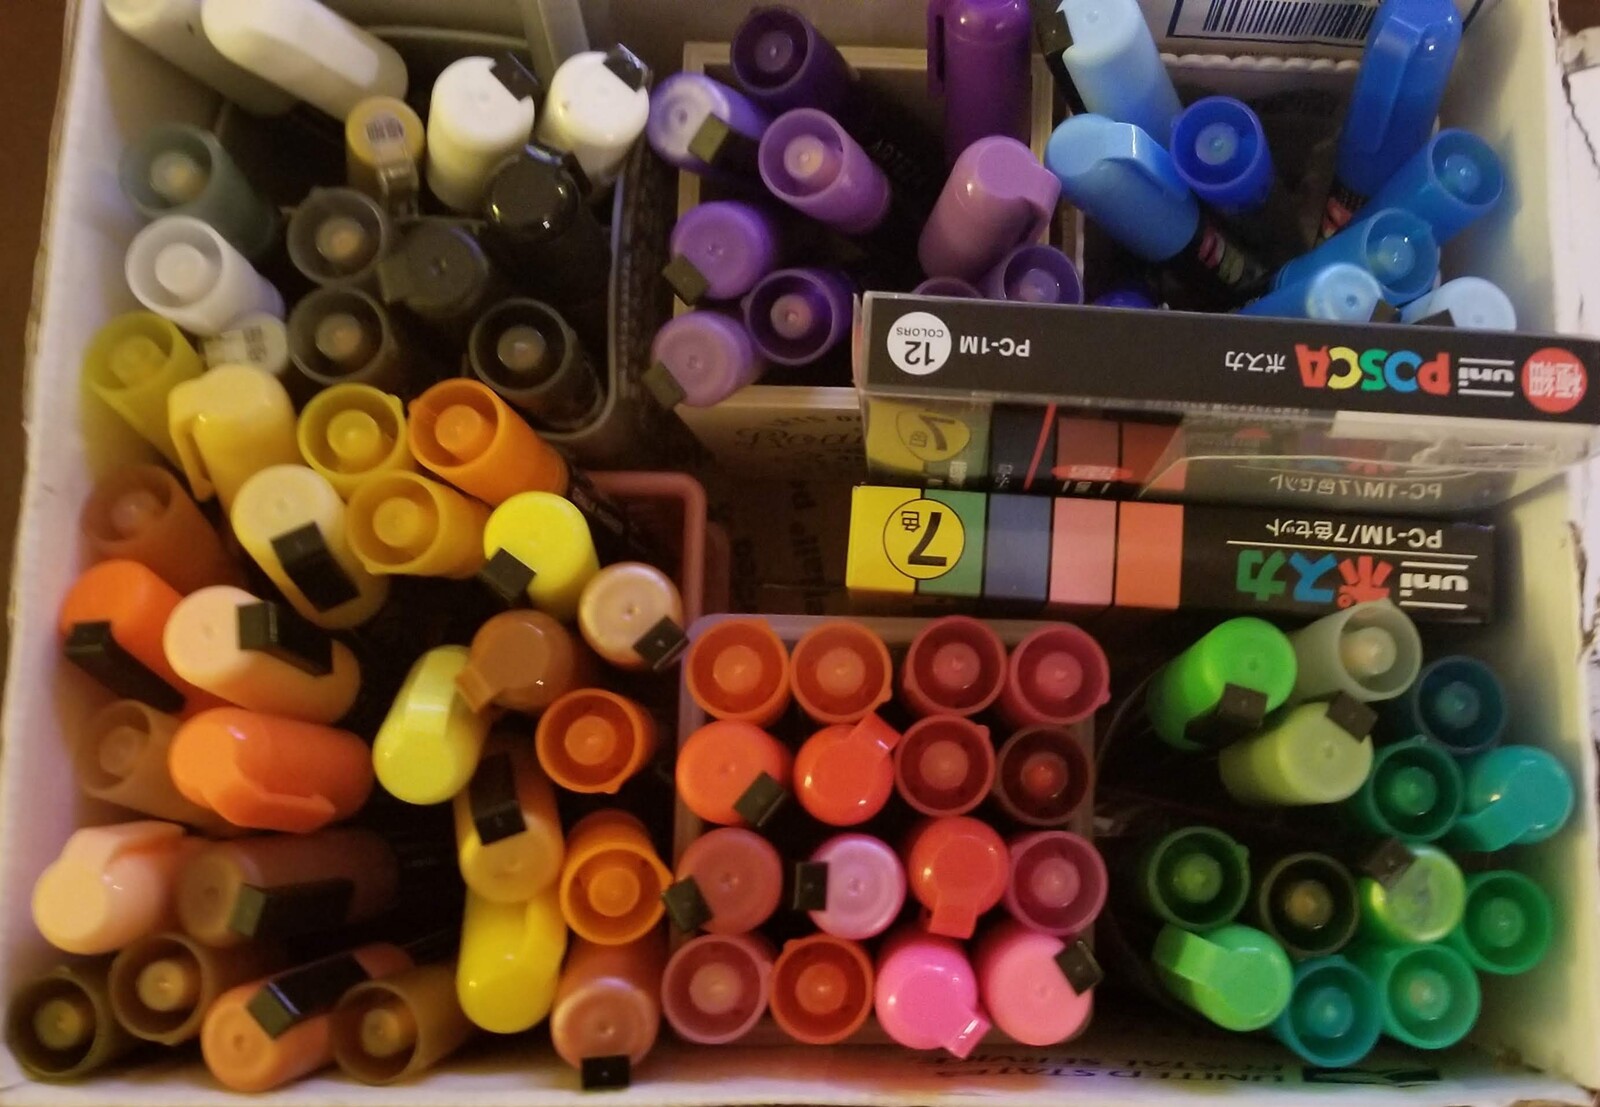 Versachalk, Cedar Chalk, Arteza chalk, and Posca paint pens. Out of 3 chalk pens, I'd say Versachalk has the best consistency.